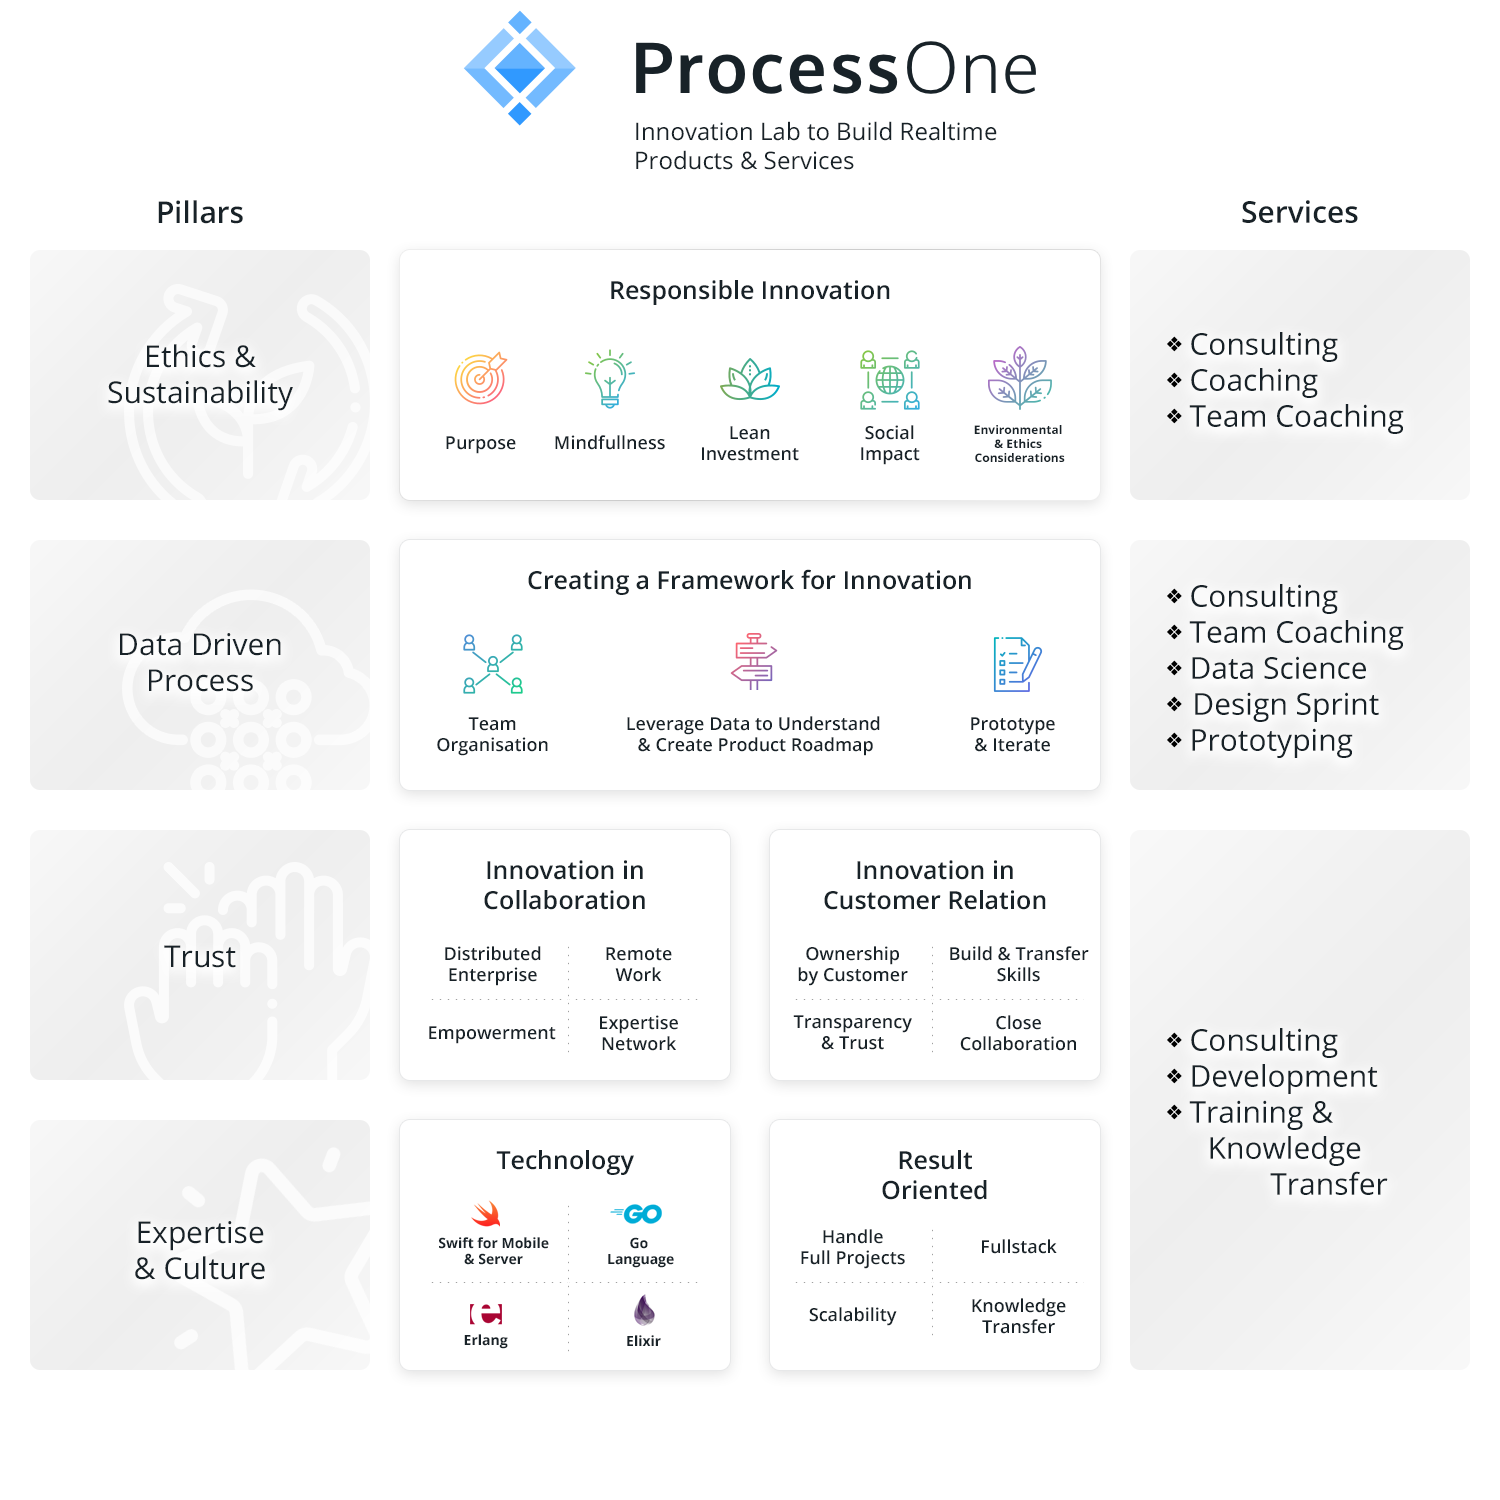 ProcessOne Innovation offering